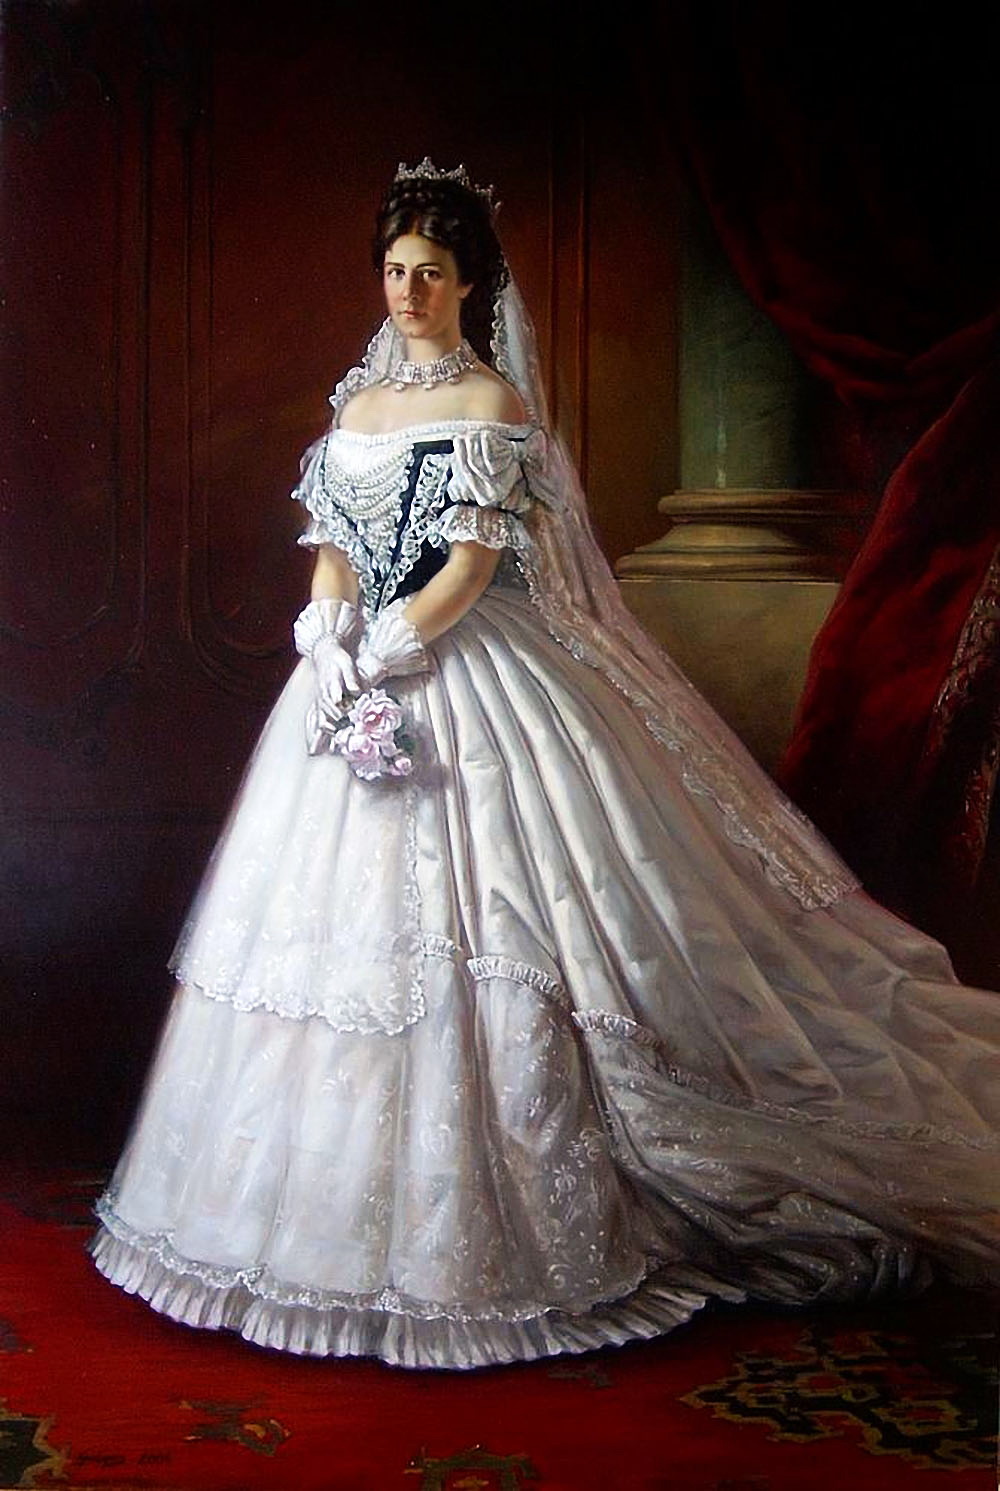 1867 Sissi wearing her Hungarian coronation dress.